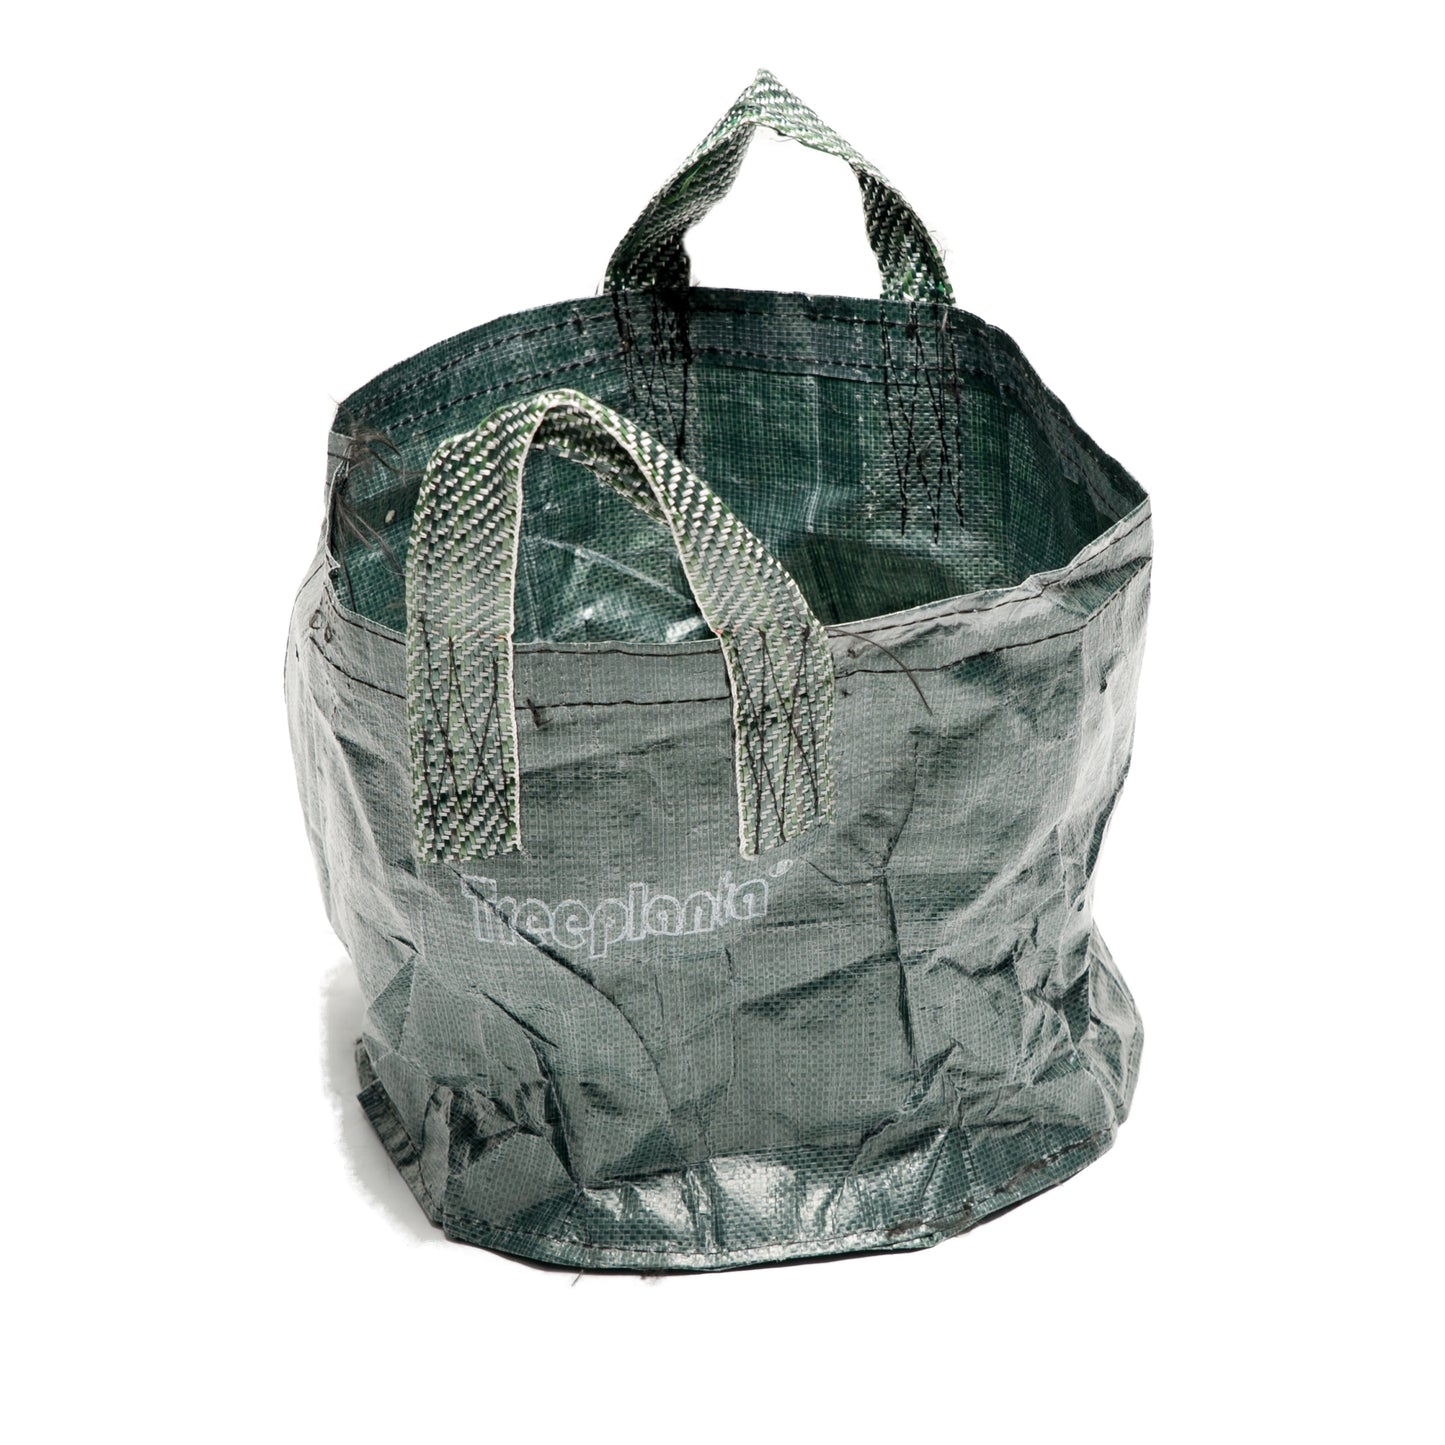 Treeplanta Container Bags 27 litre LxH 35x28cm, pack = 100 pieces, 2 handles